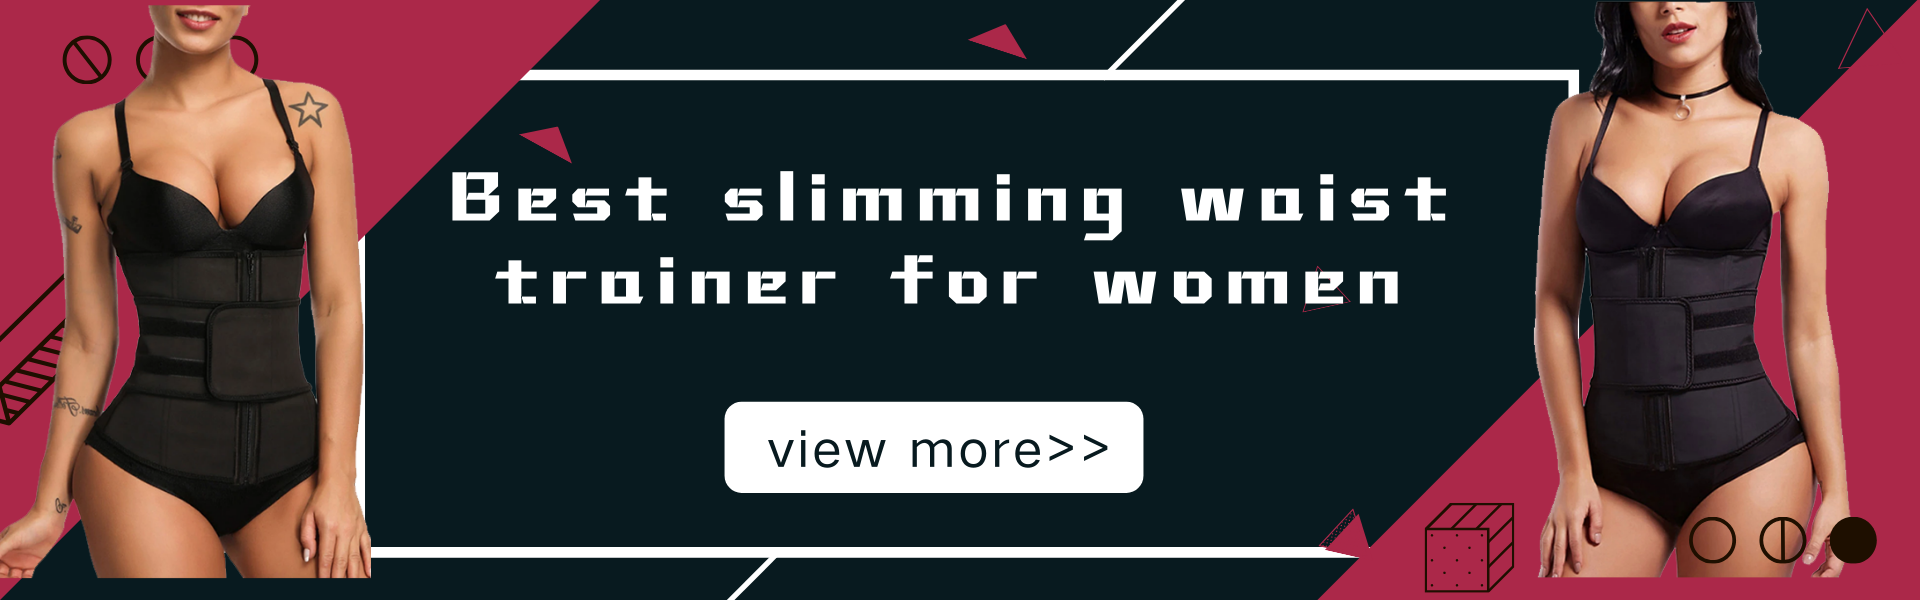 Best Slimming Waist Trainer for Women